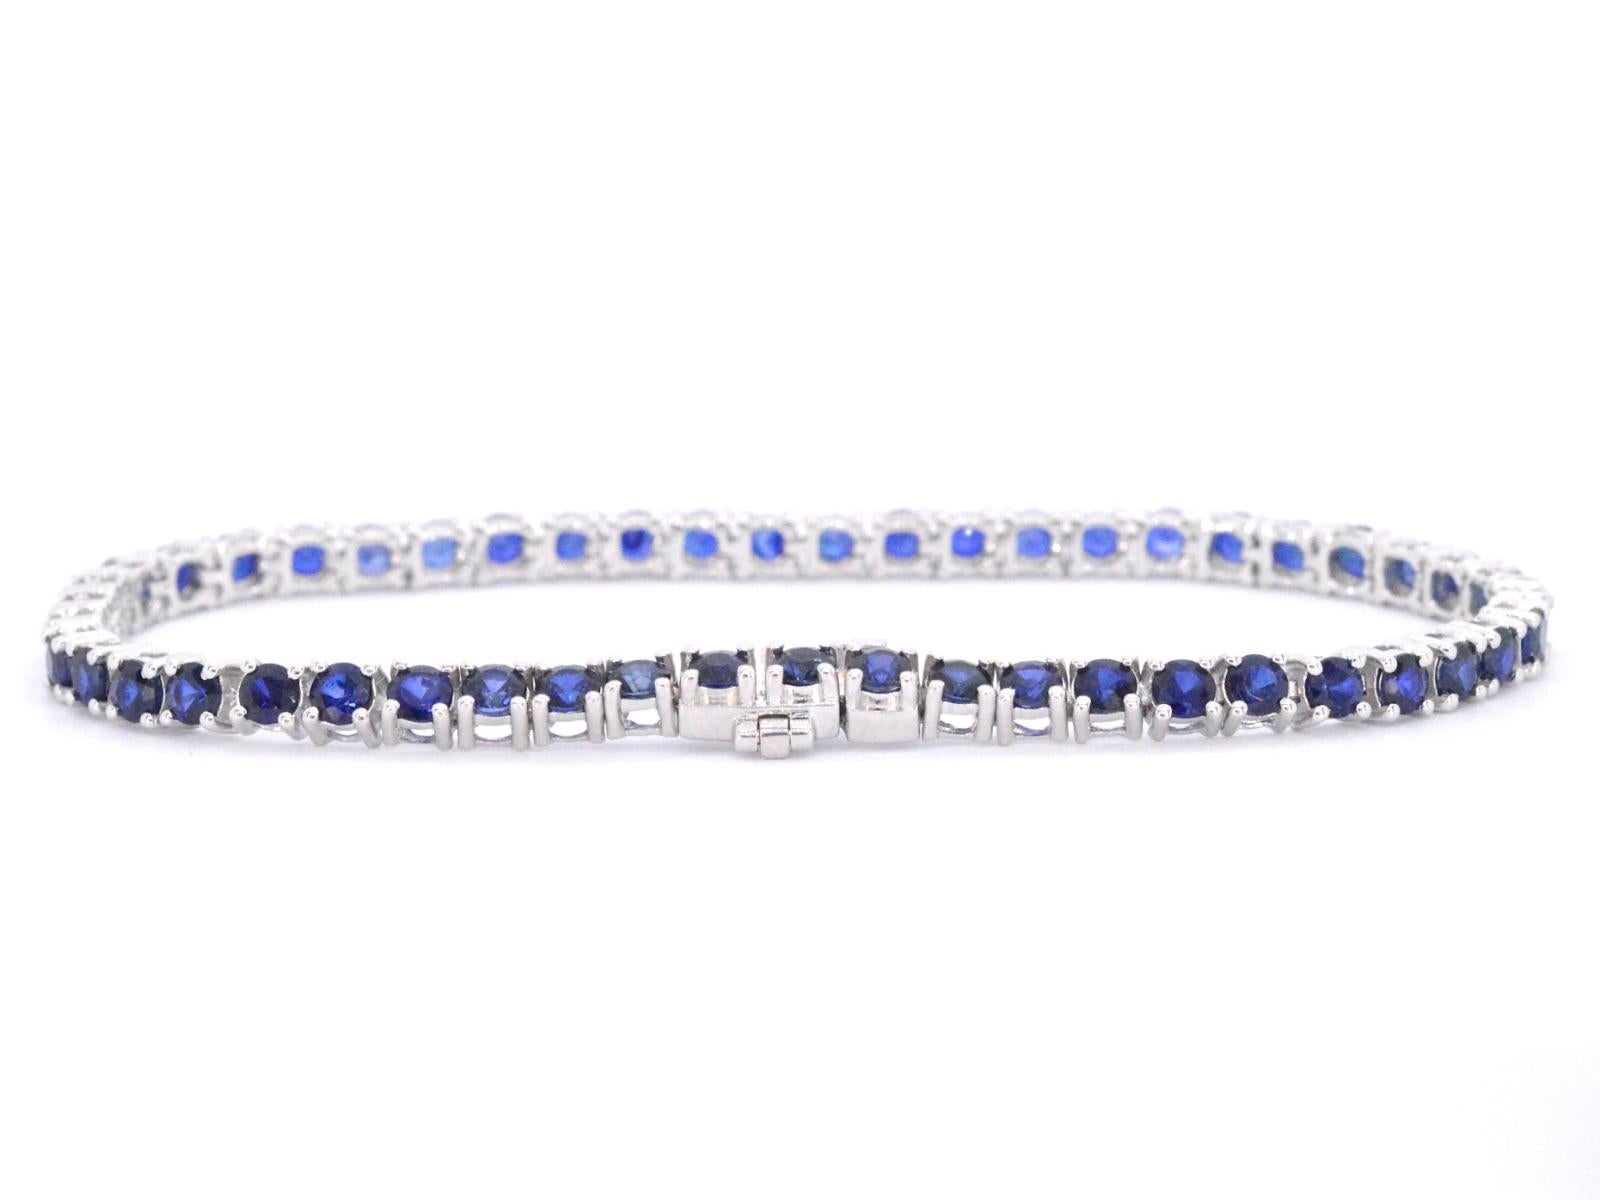 Brilliant Cut White Gold Tennis Bracelet with Sapphires For Sale